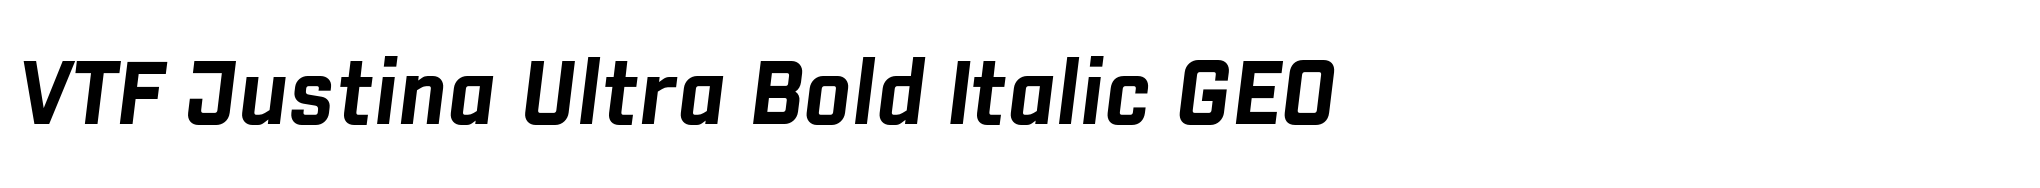 VTF Justina Ultra Bold Italic GEO image